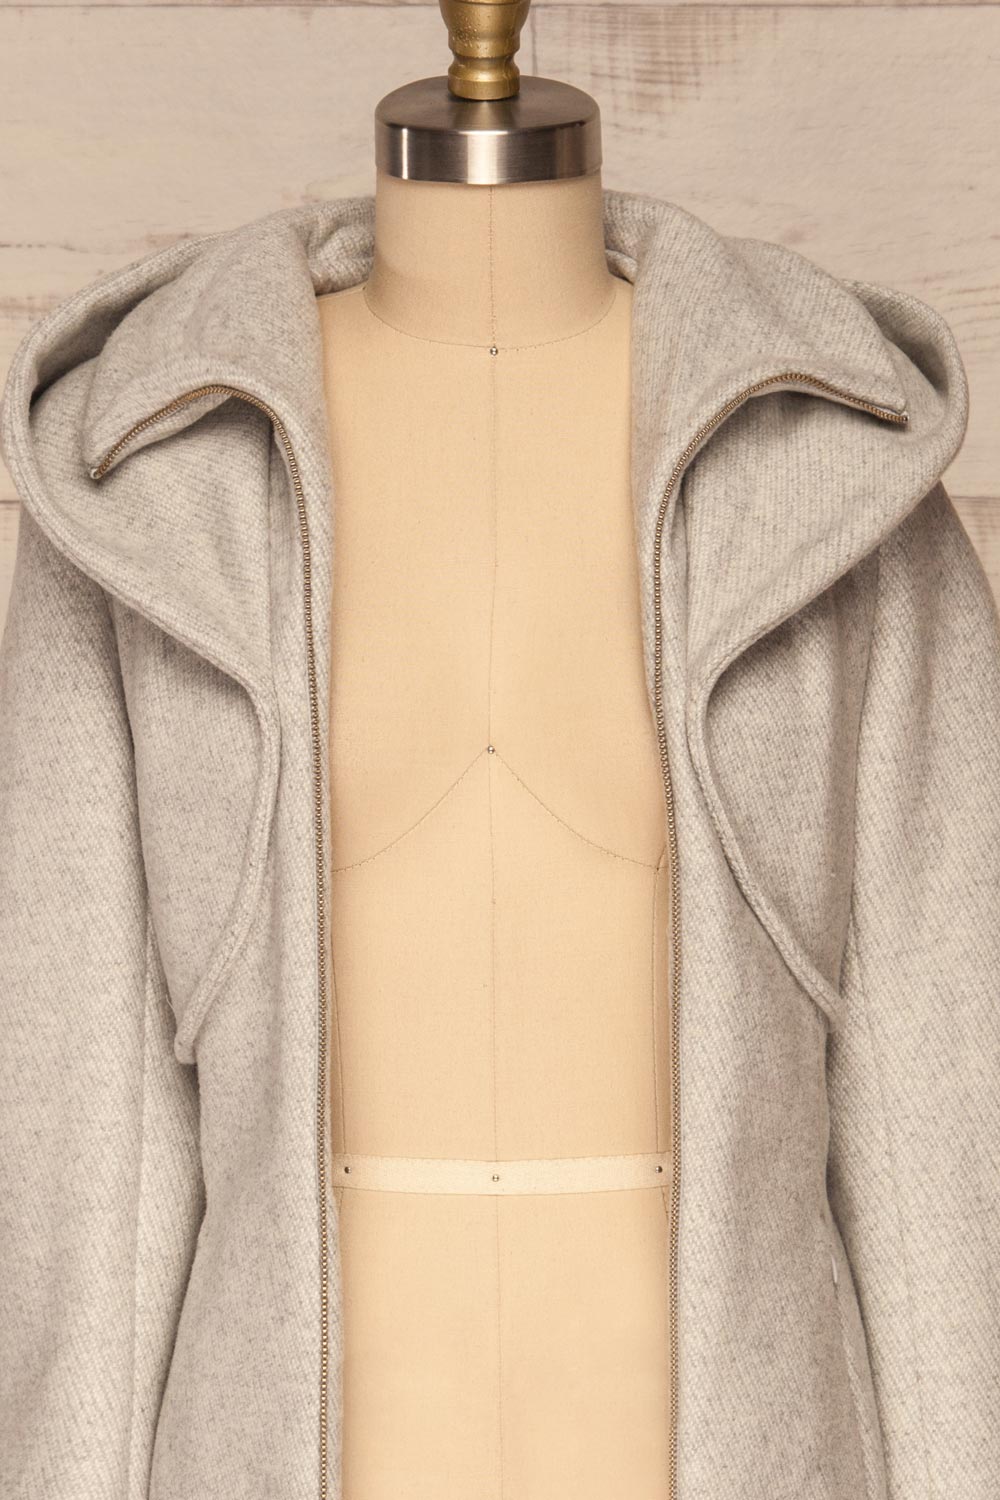 Arya Grey Wool Hooded Soia&Kyo Trench Coat front close up open | La Petite Garçonne